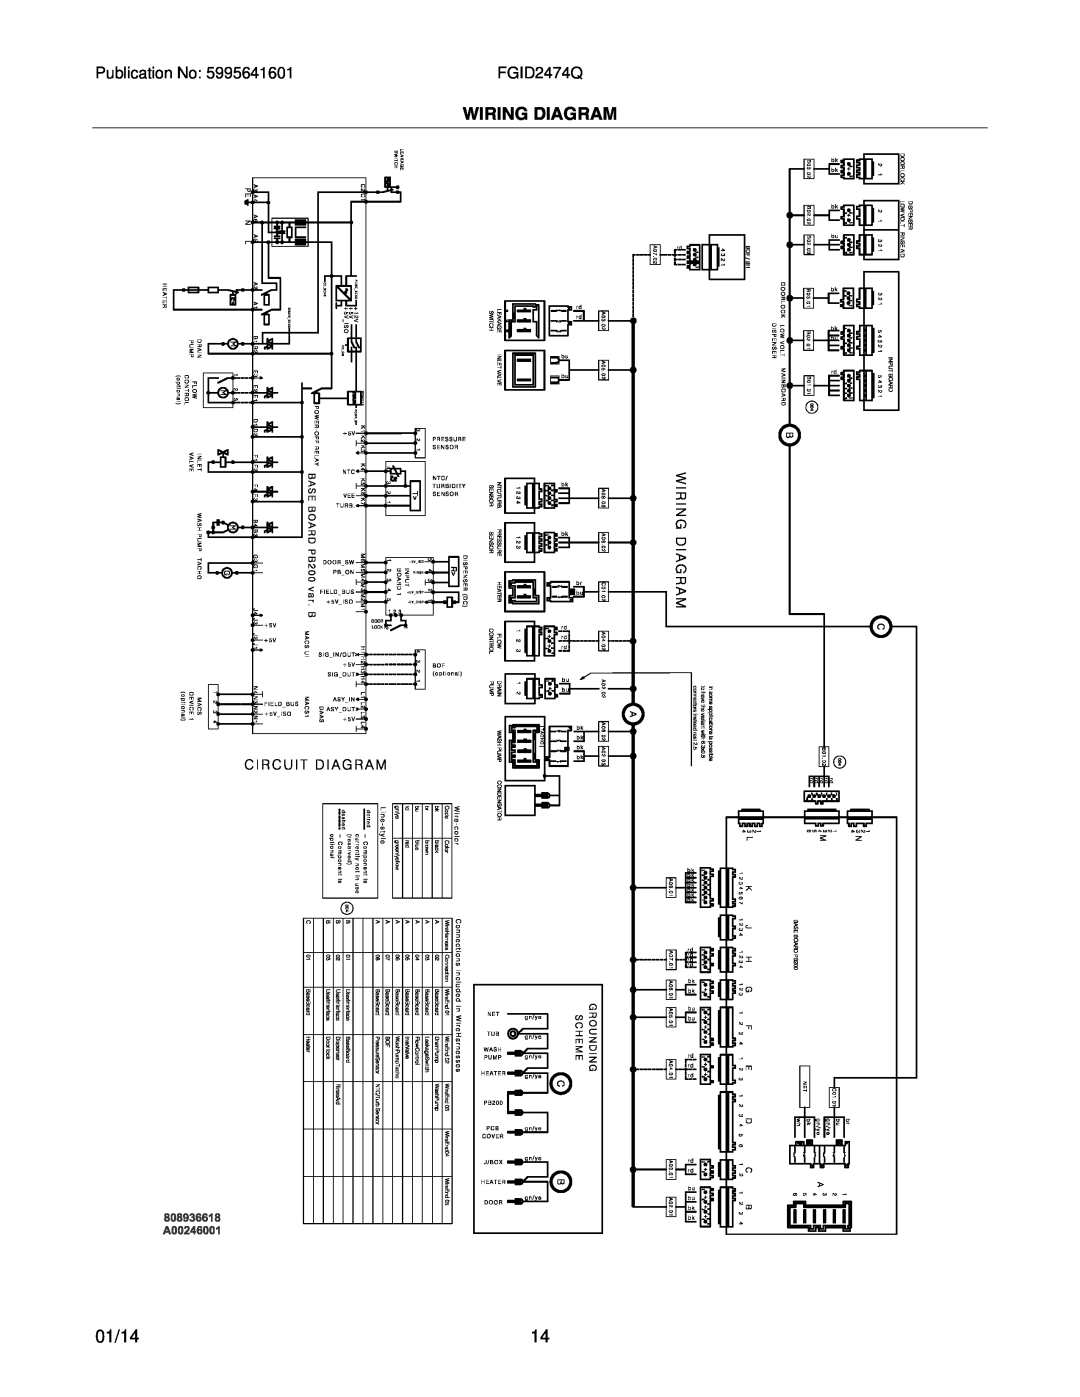 Frigidaire FGID2474QF installation instructions Wiring Diagram, 01/14 